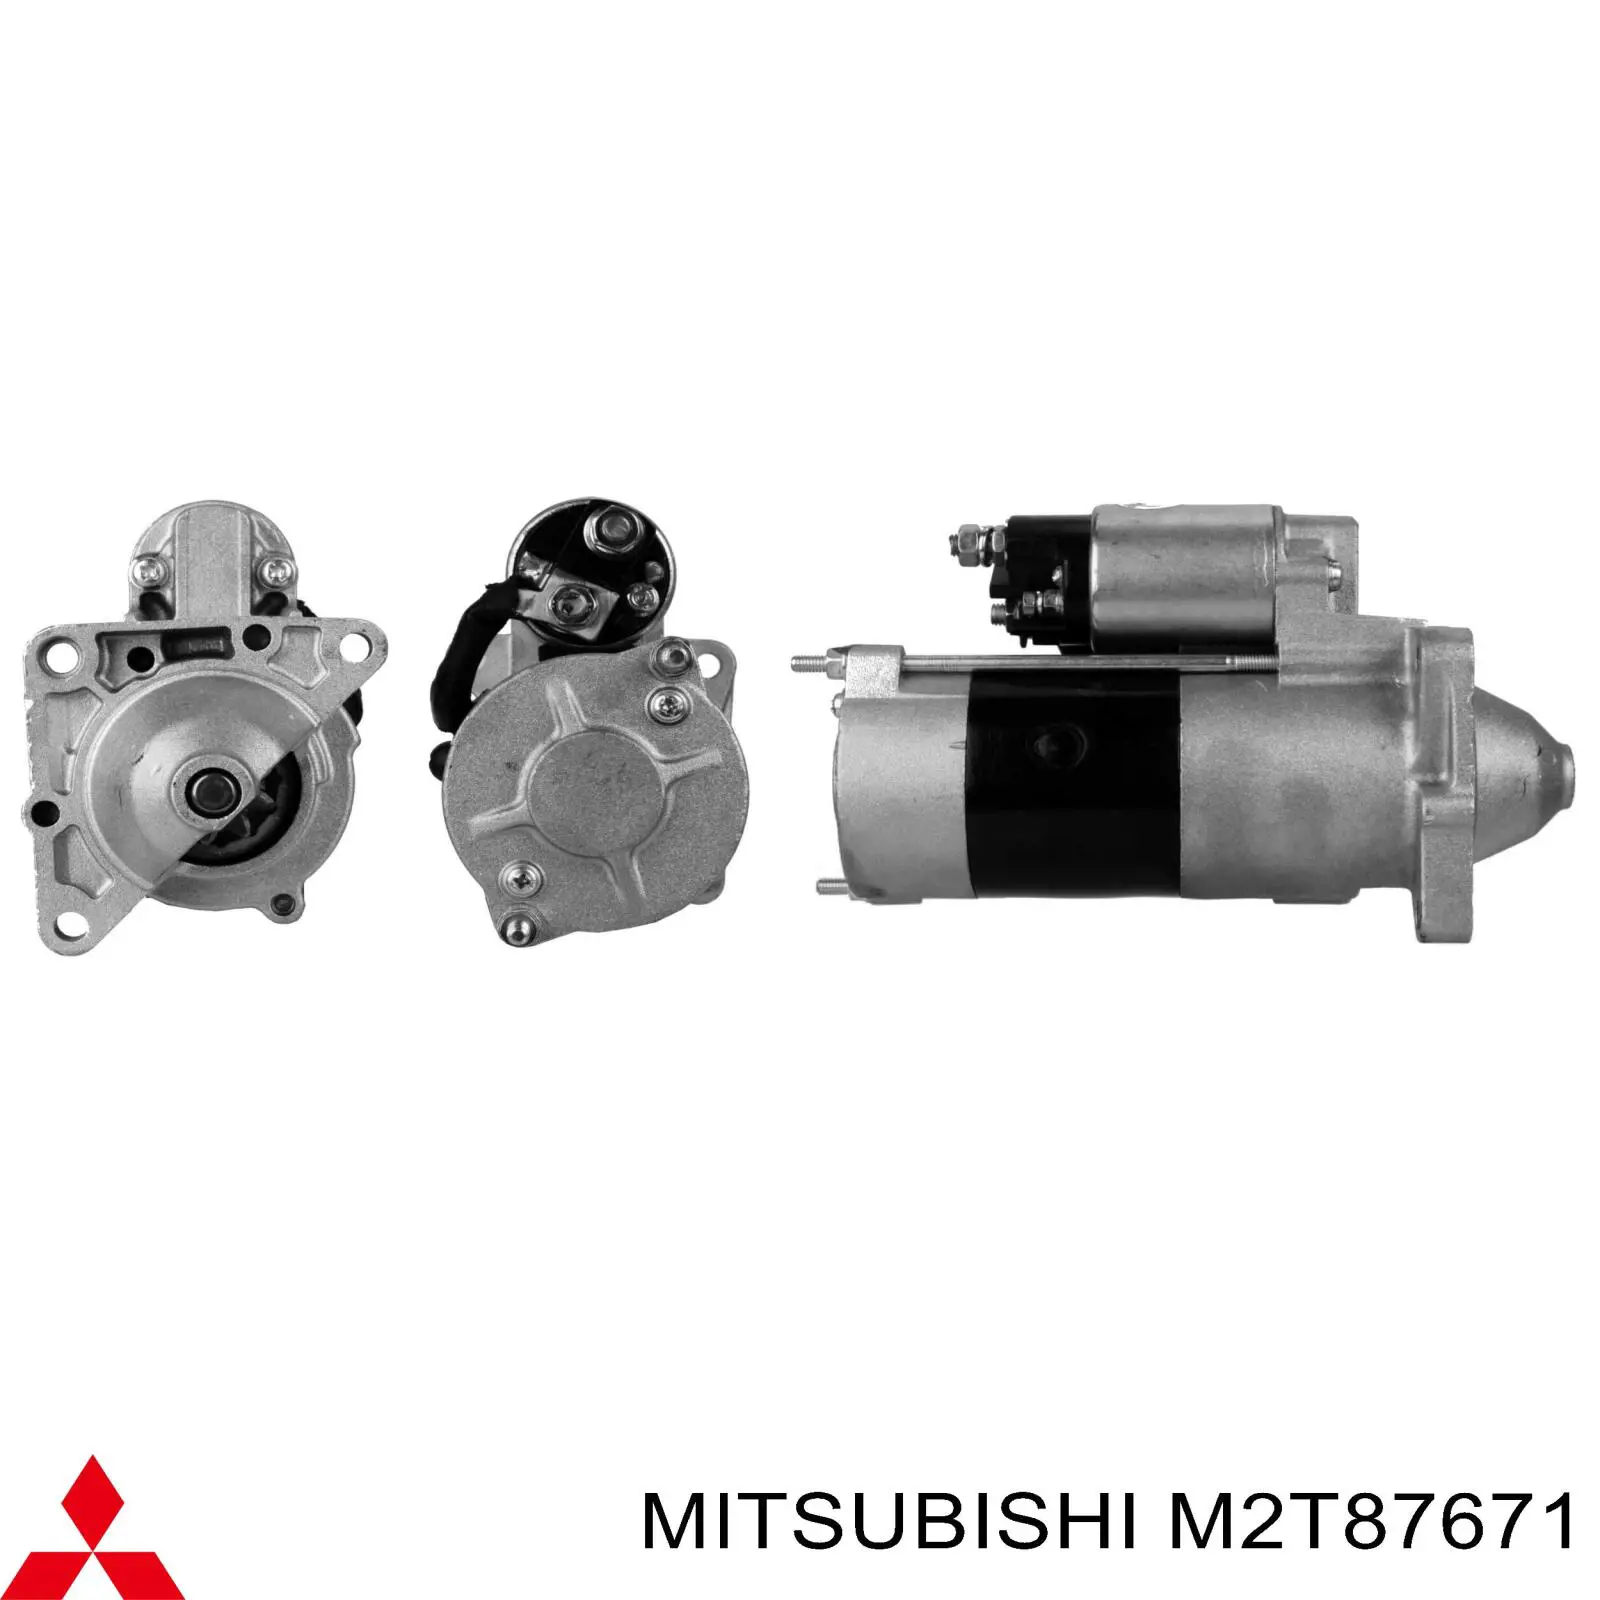 M2T87671 Mitsubishi стартер